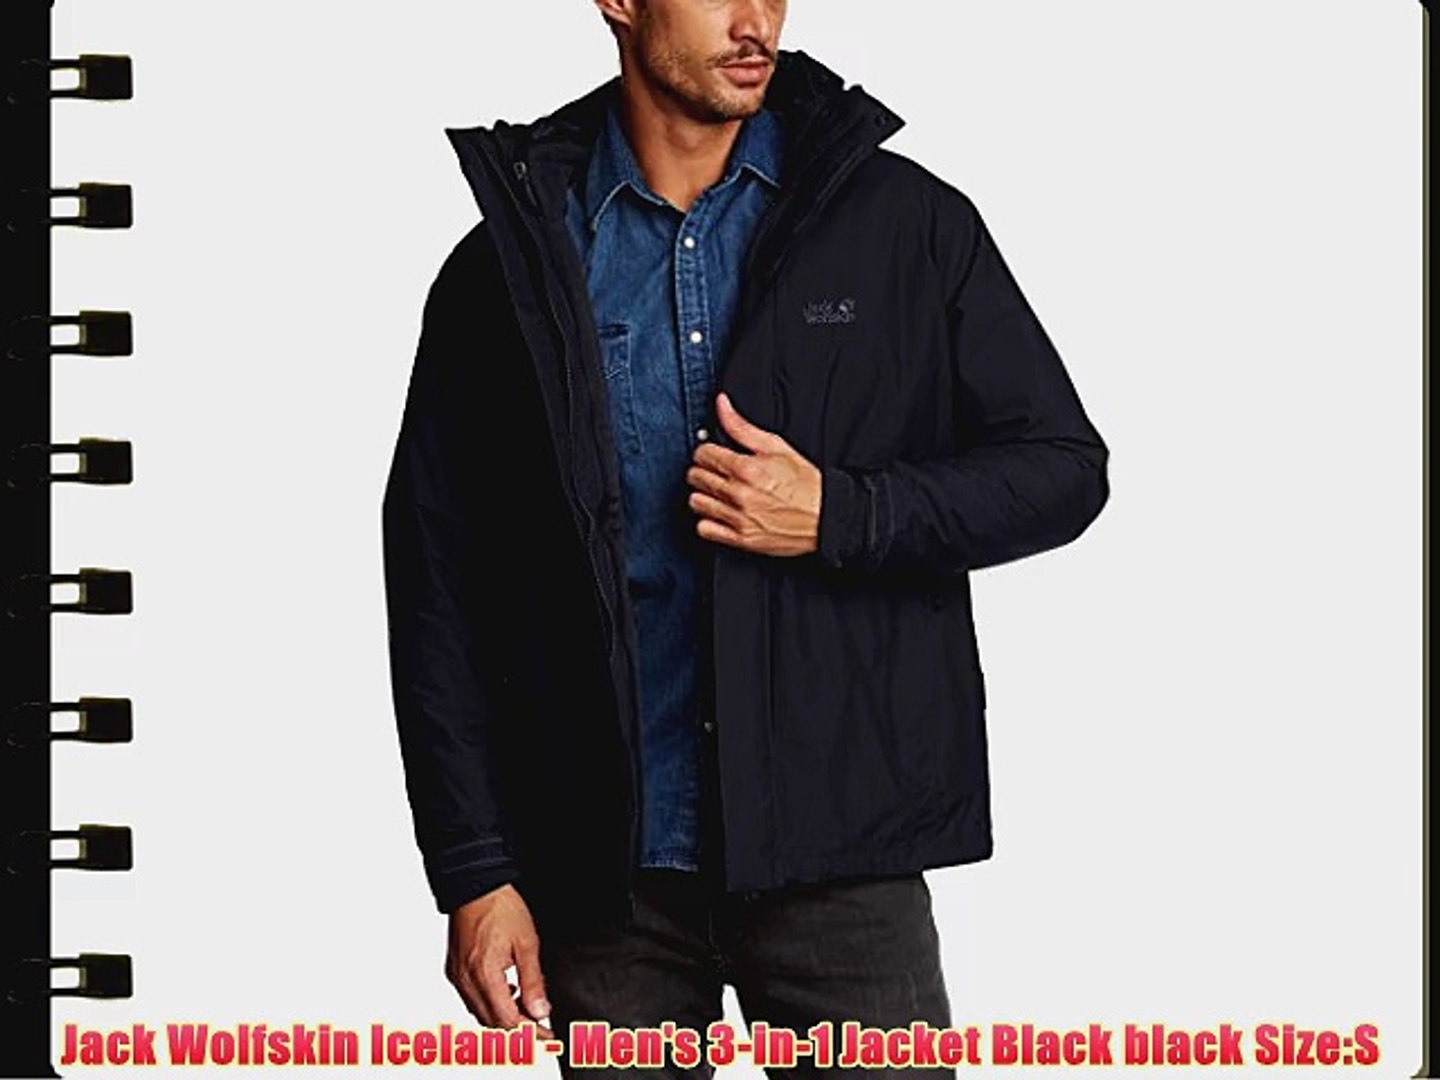 Jack Wolfskin Iceland - Men's 3-in-1 Jacket Black black Size:S - video  Dailymotion